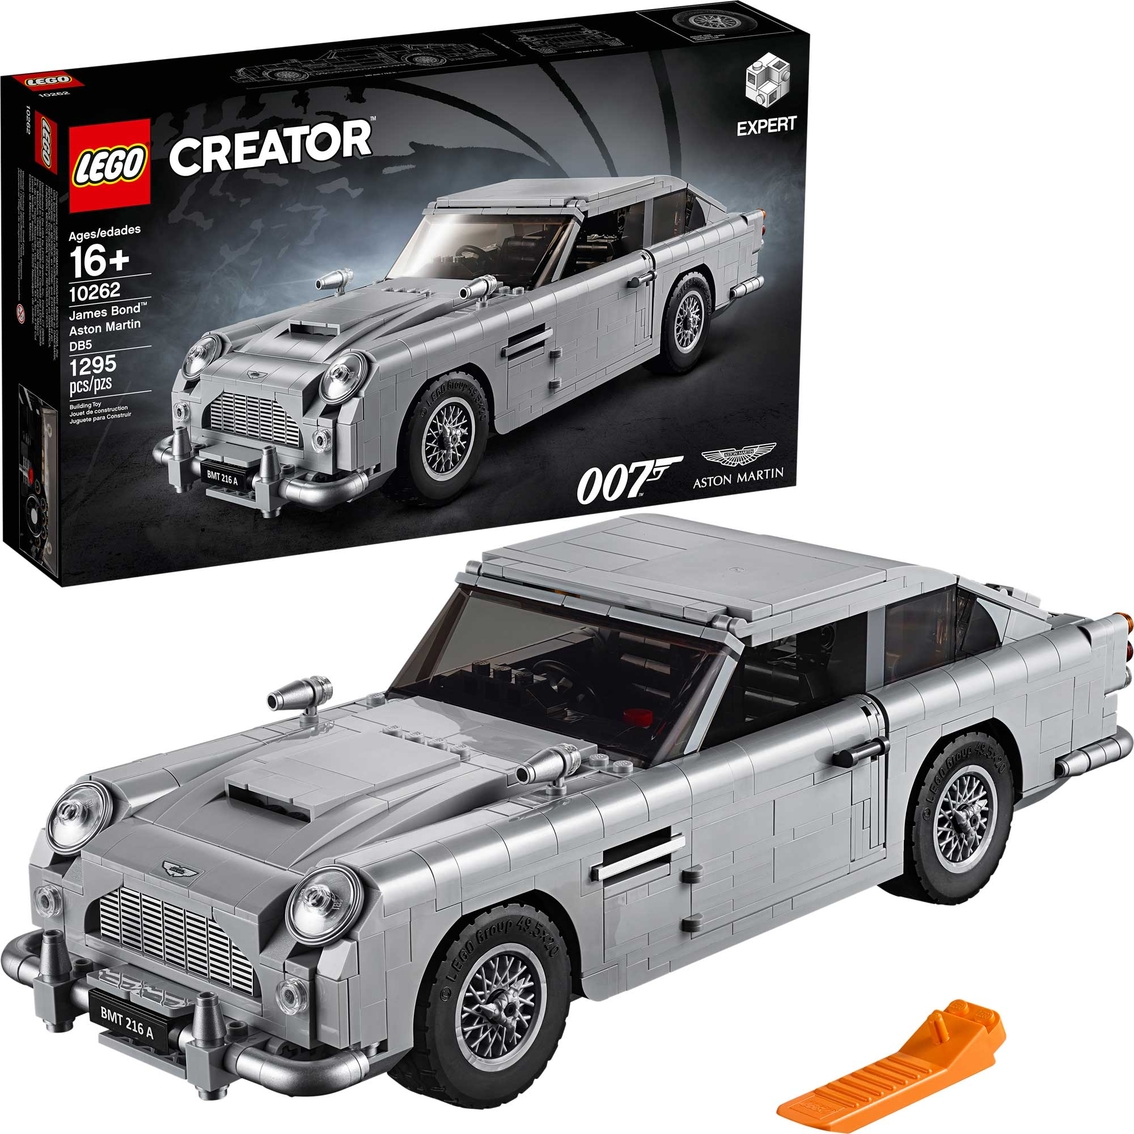 LEGO Creator Expert James Bond Aston Martin DB5 Model 10262 - Image 2 of 3